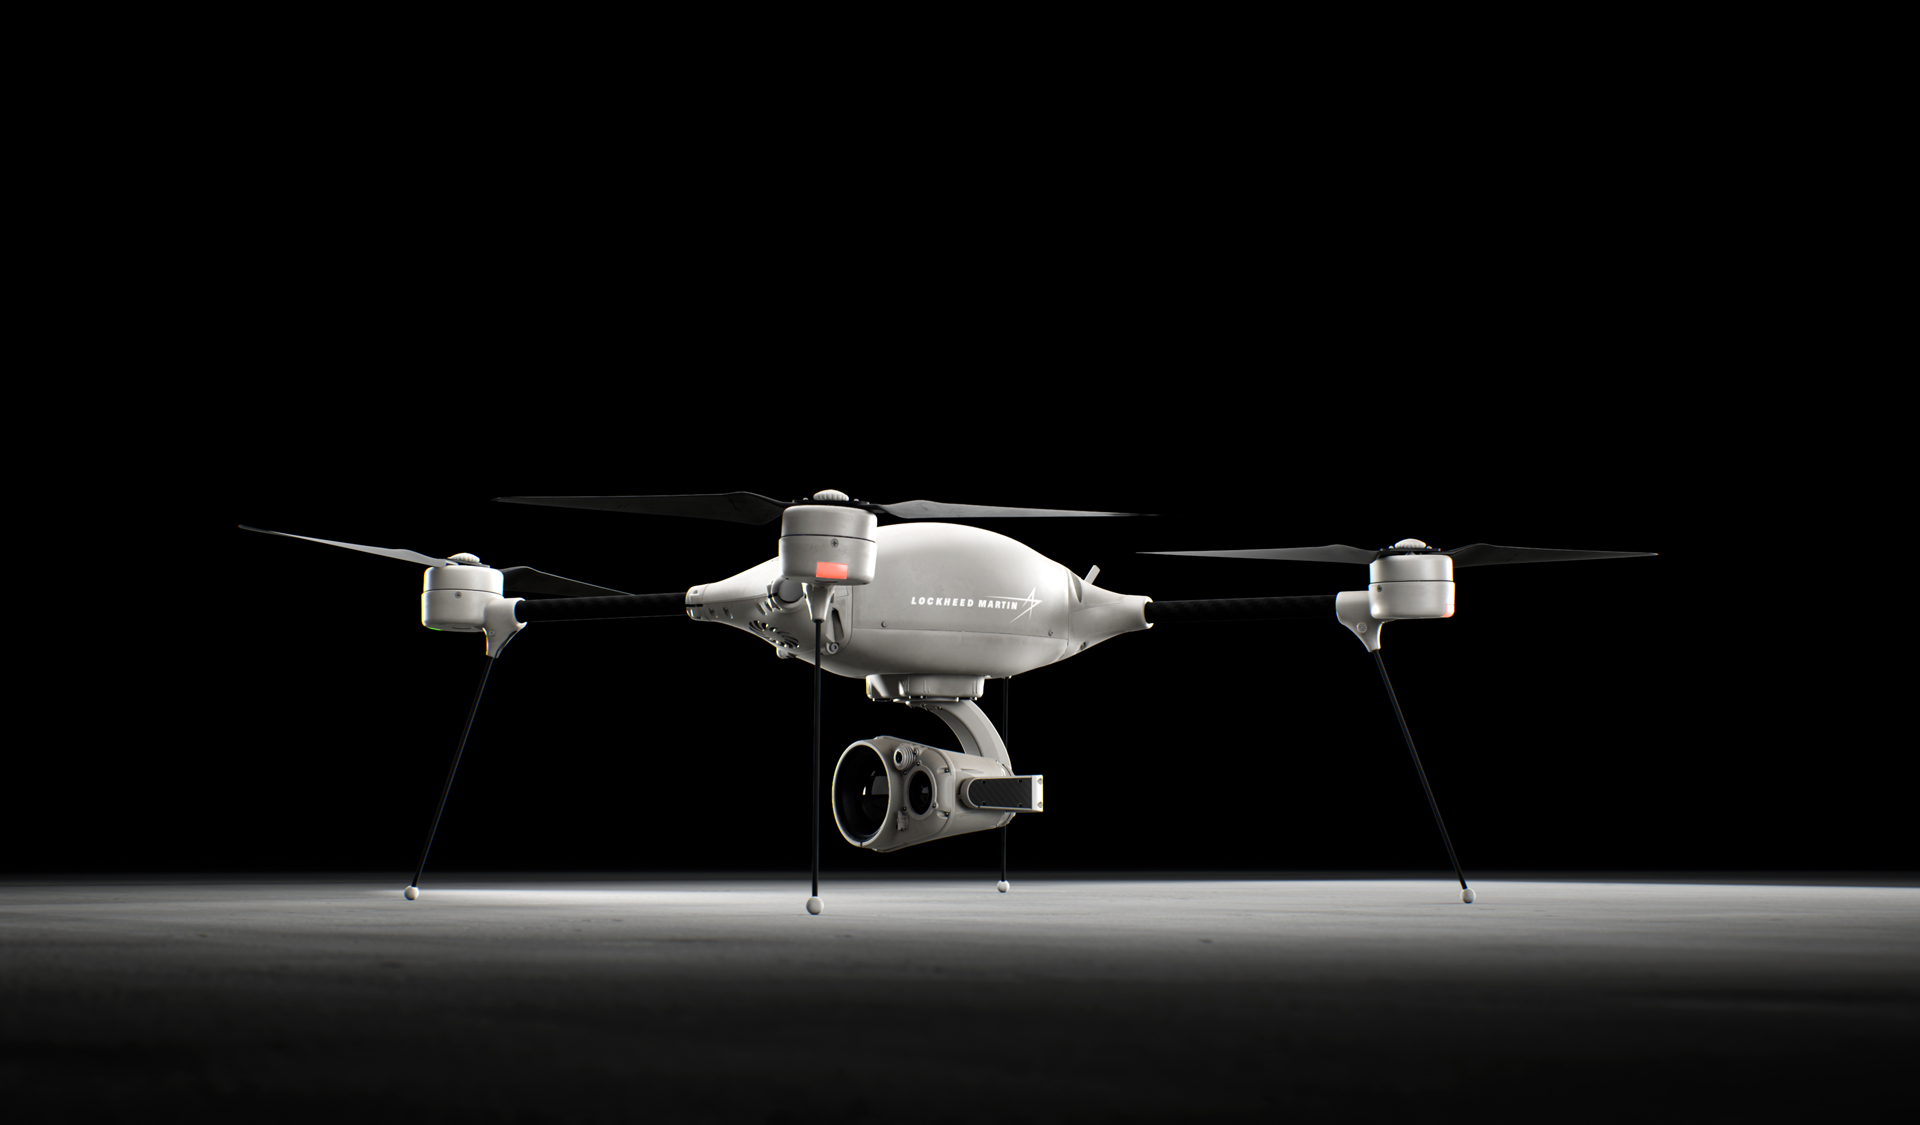 Lockheed Martin will create photo realistic simulations like this Indago 3 small UAV image with Unreal Engine.